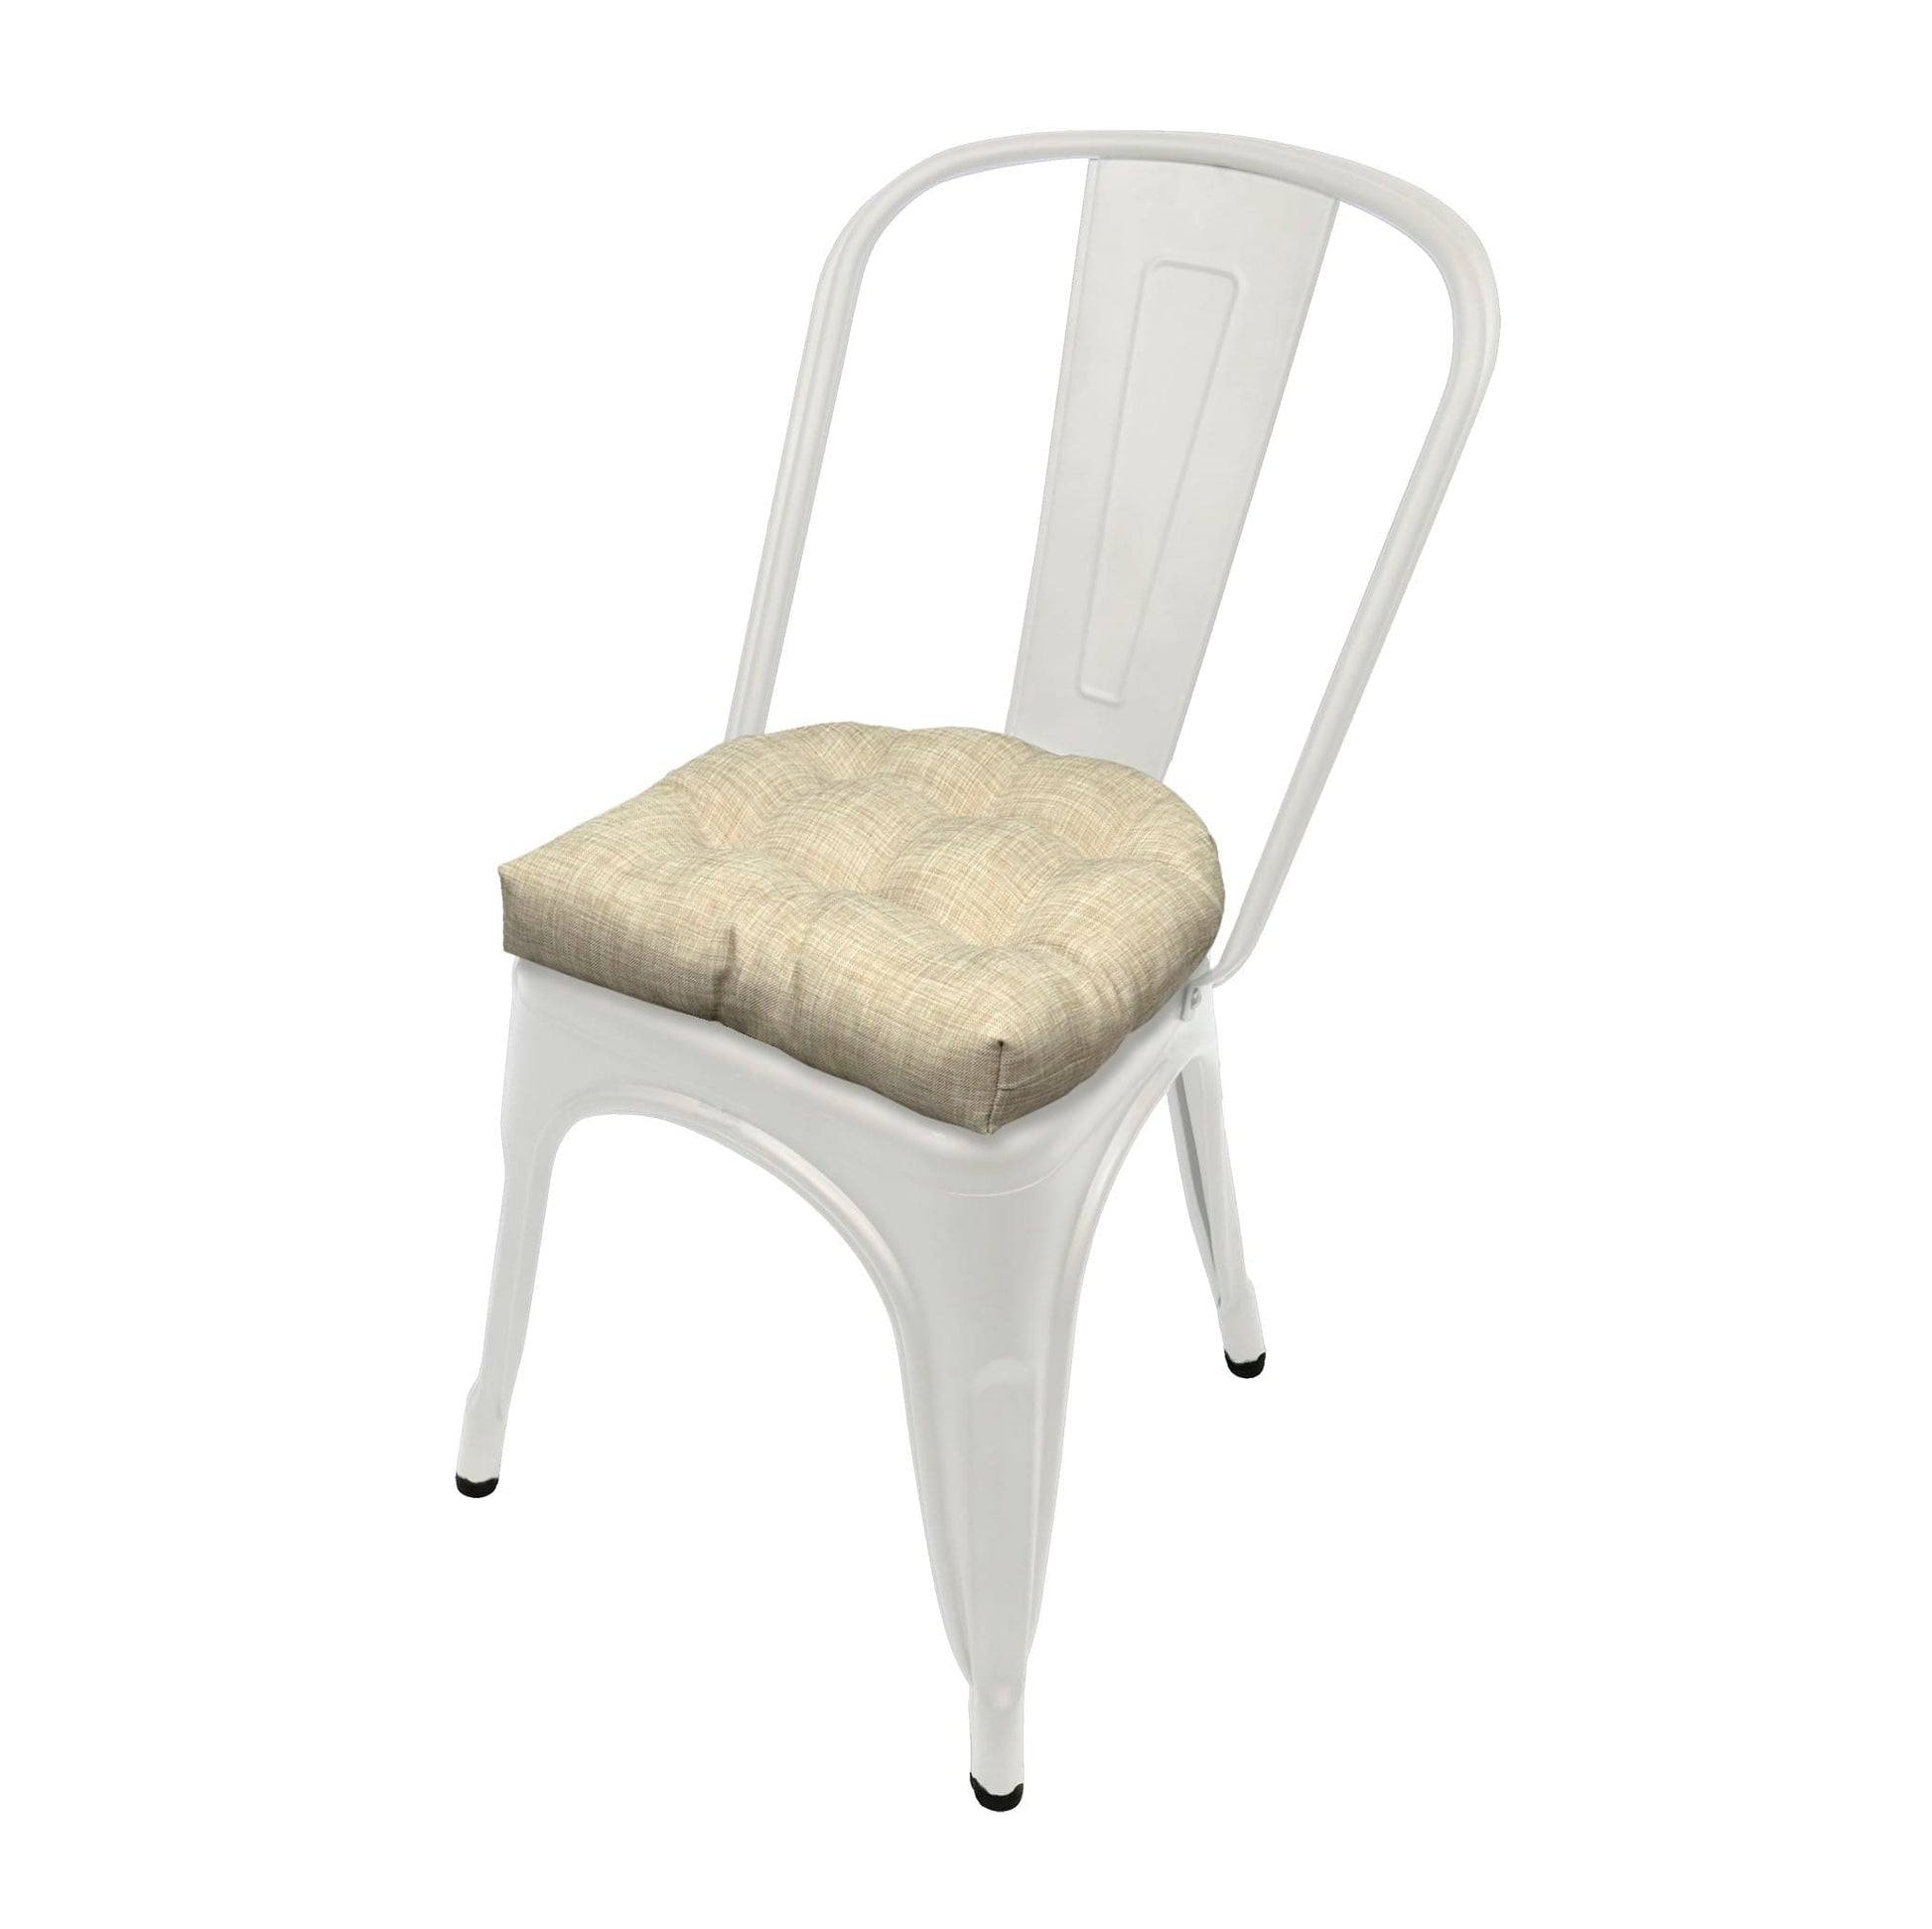 Hayden Beige Industrial Chair Cushion - Latex Foam Fill - Barnett Home Decor - Tan 